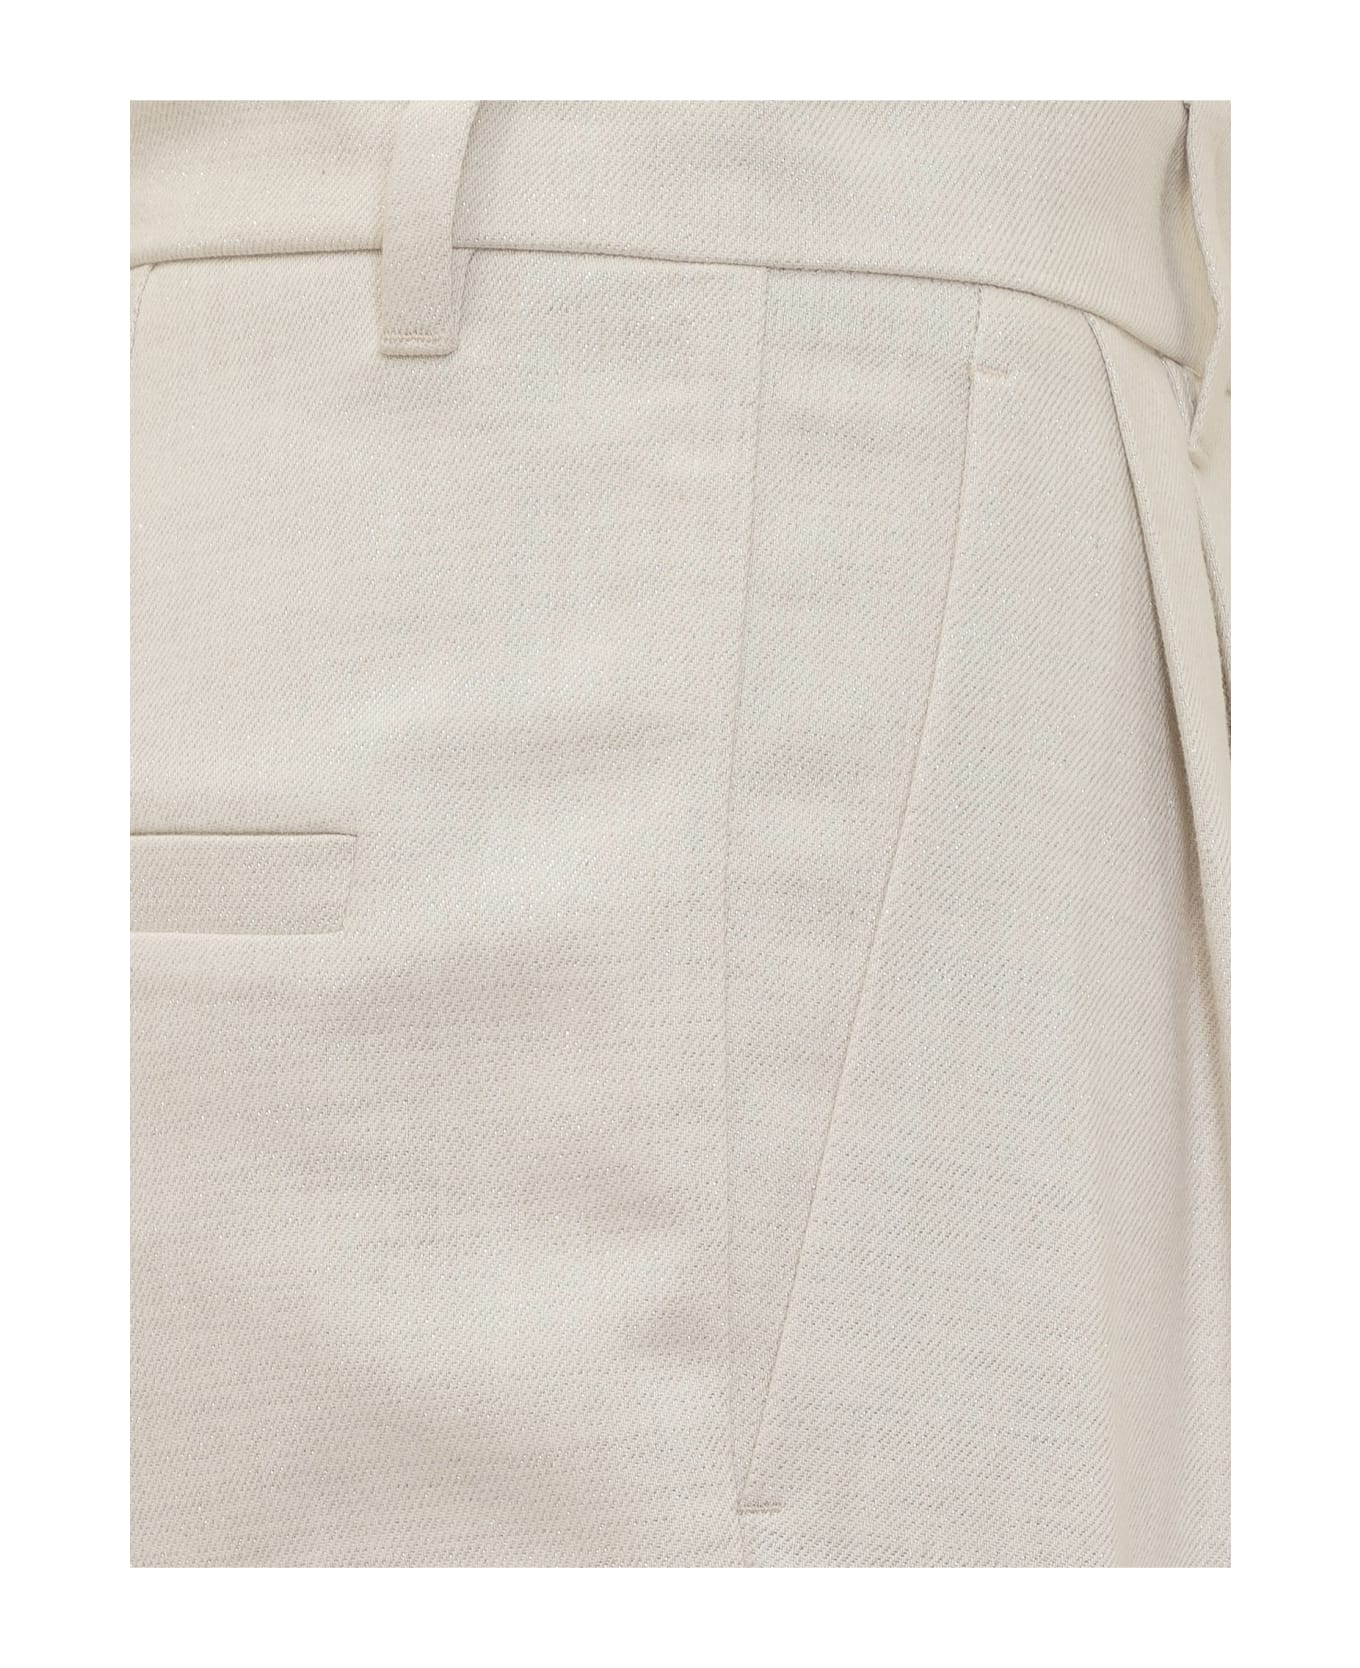 Brunello Cucinelli Loose Fit Trousers - Bianco